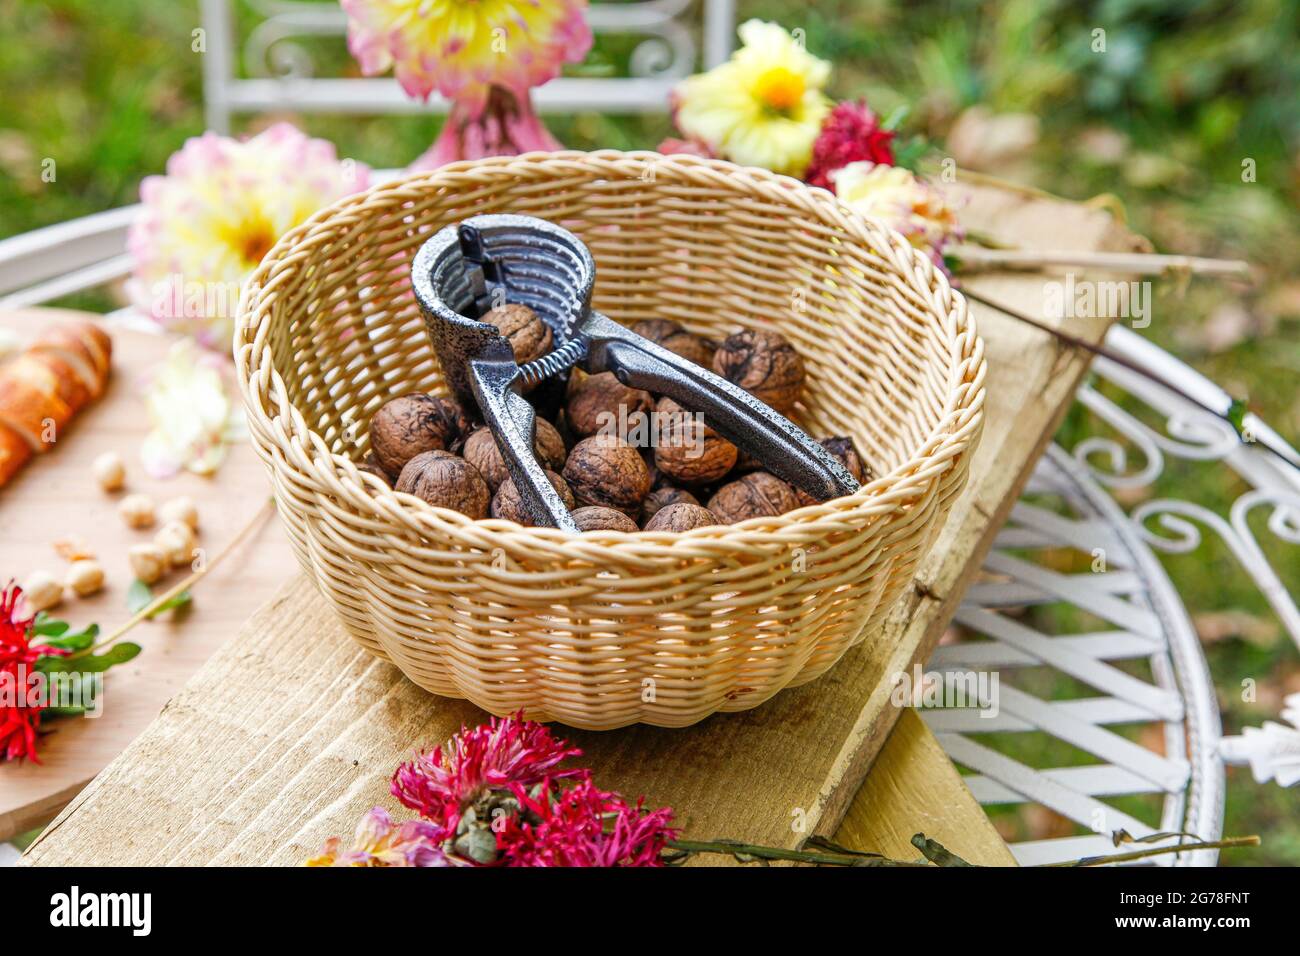 Basket, walnuts, nutcracker, Stock Photo